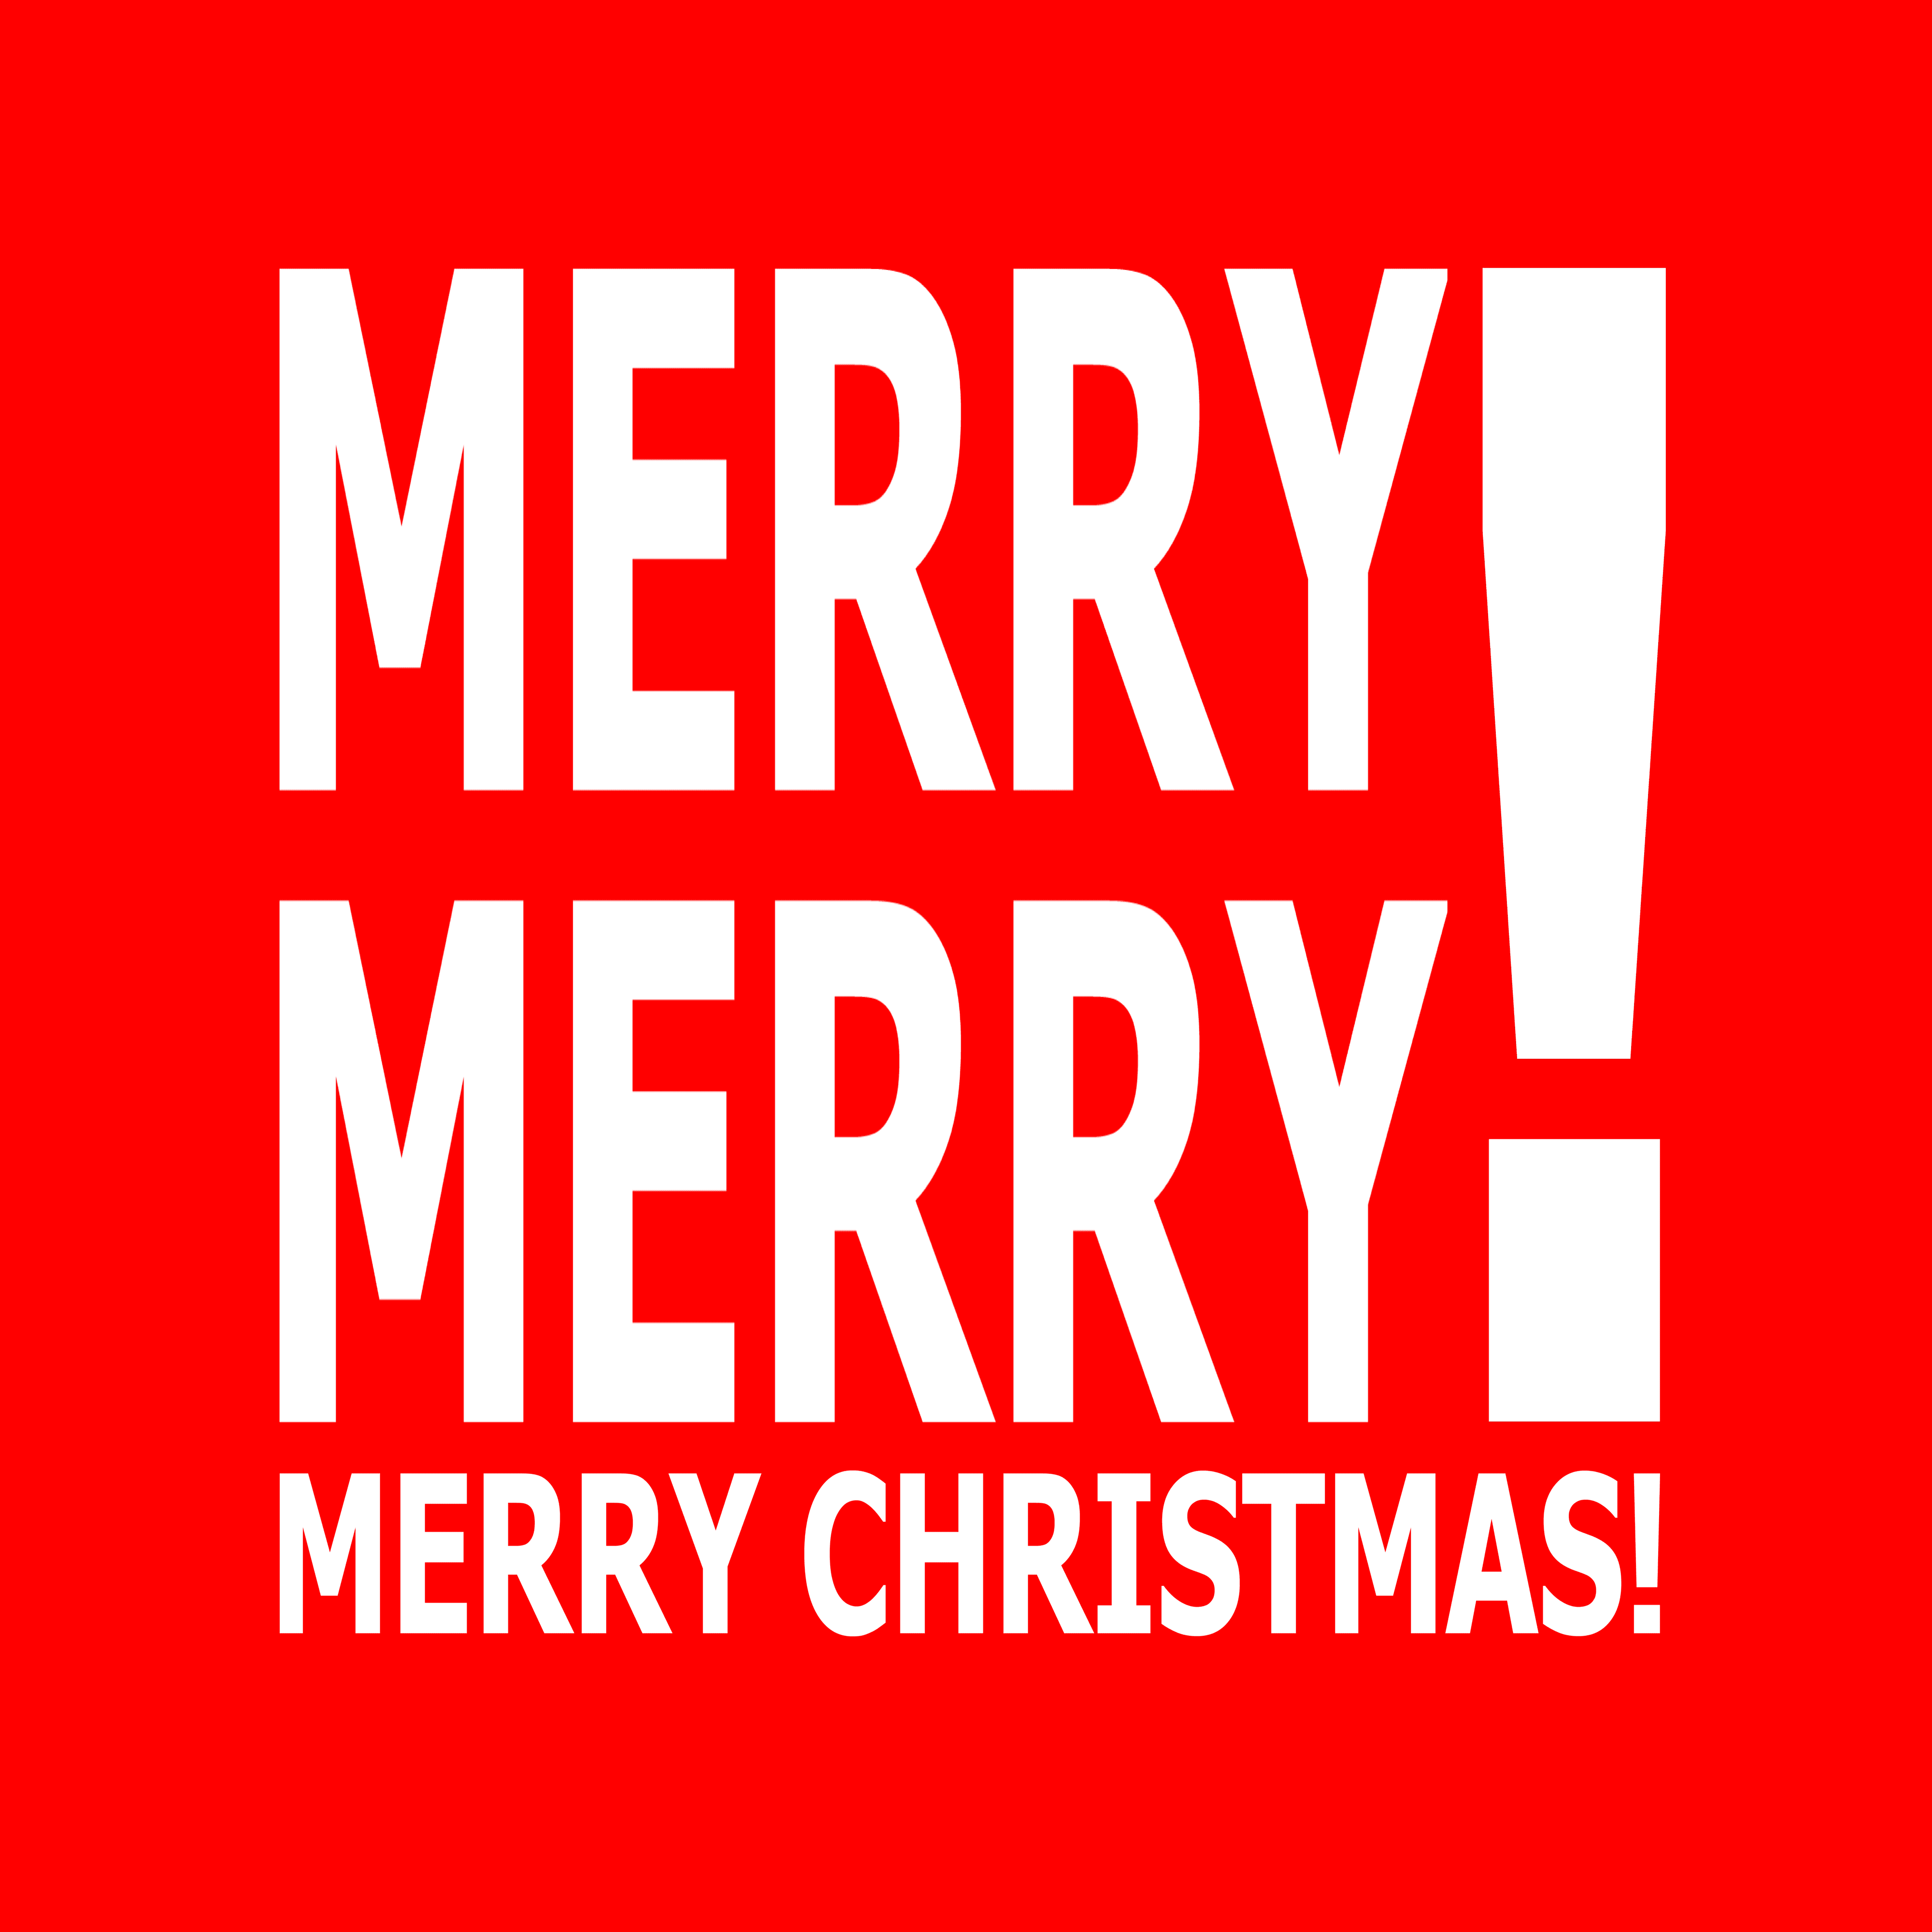 Merry Merry! Merry Christmas!